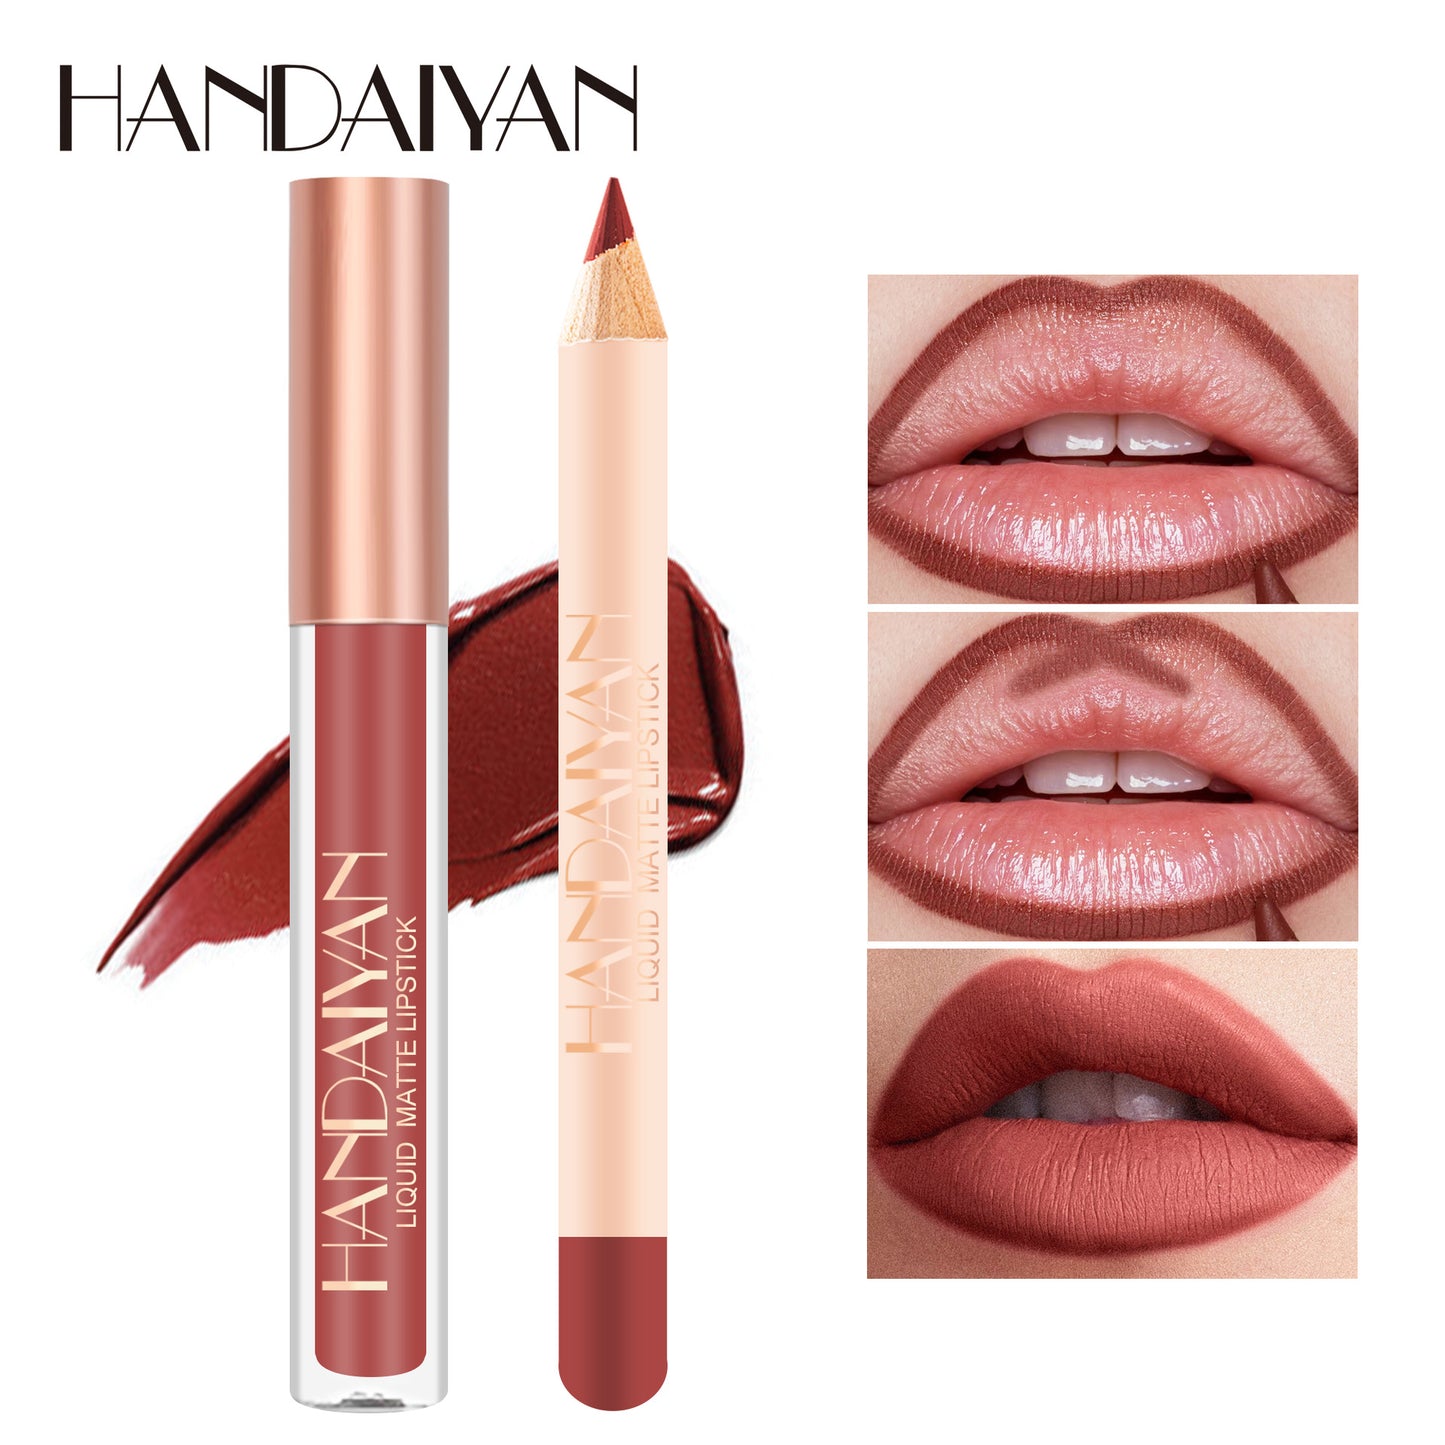 HANDAIYANN-Non stick cup lipliner combination suit matte lipstick velvet lipliner